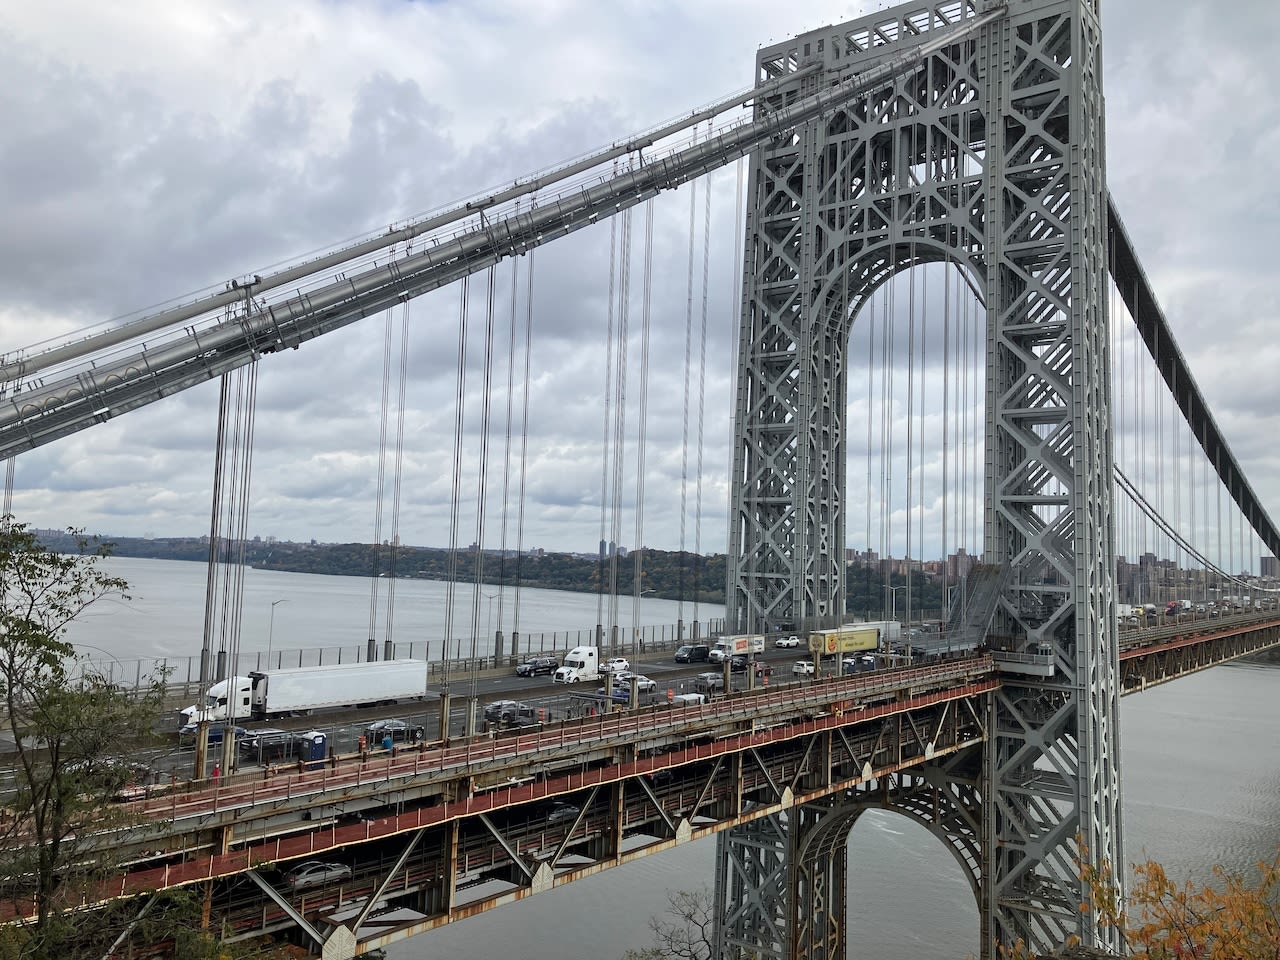 Project to rebuild the George Washington Bridge gets $455M boost